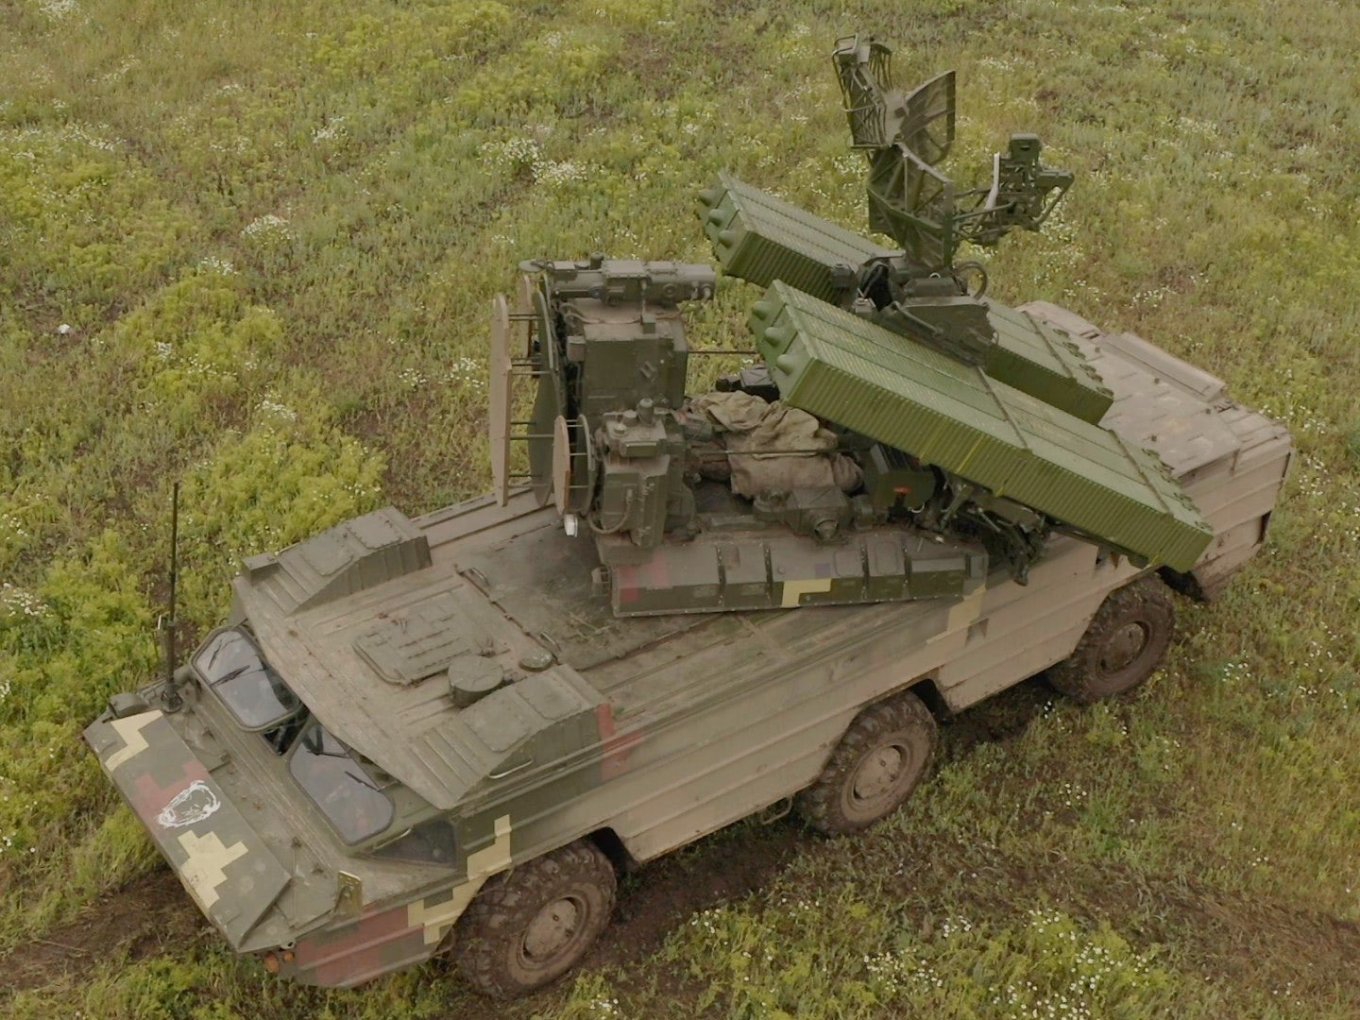 9K33 Osa SAM (NATO reporting name SA-8 Gecko) on a start position, Defense Express